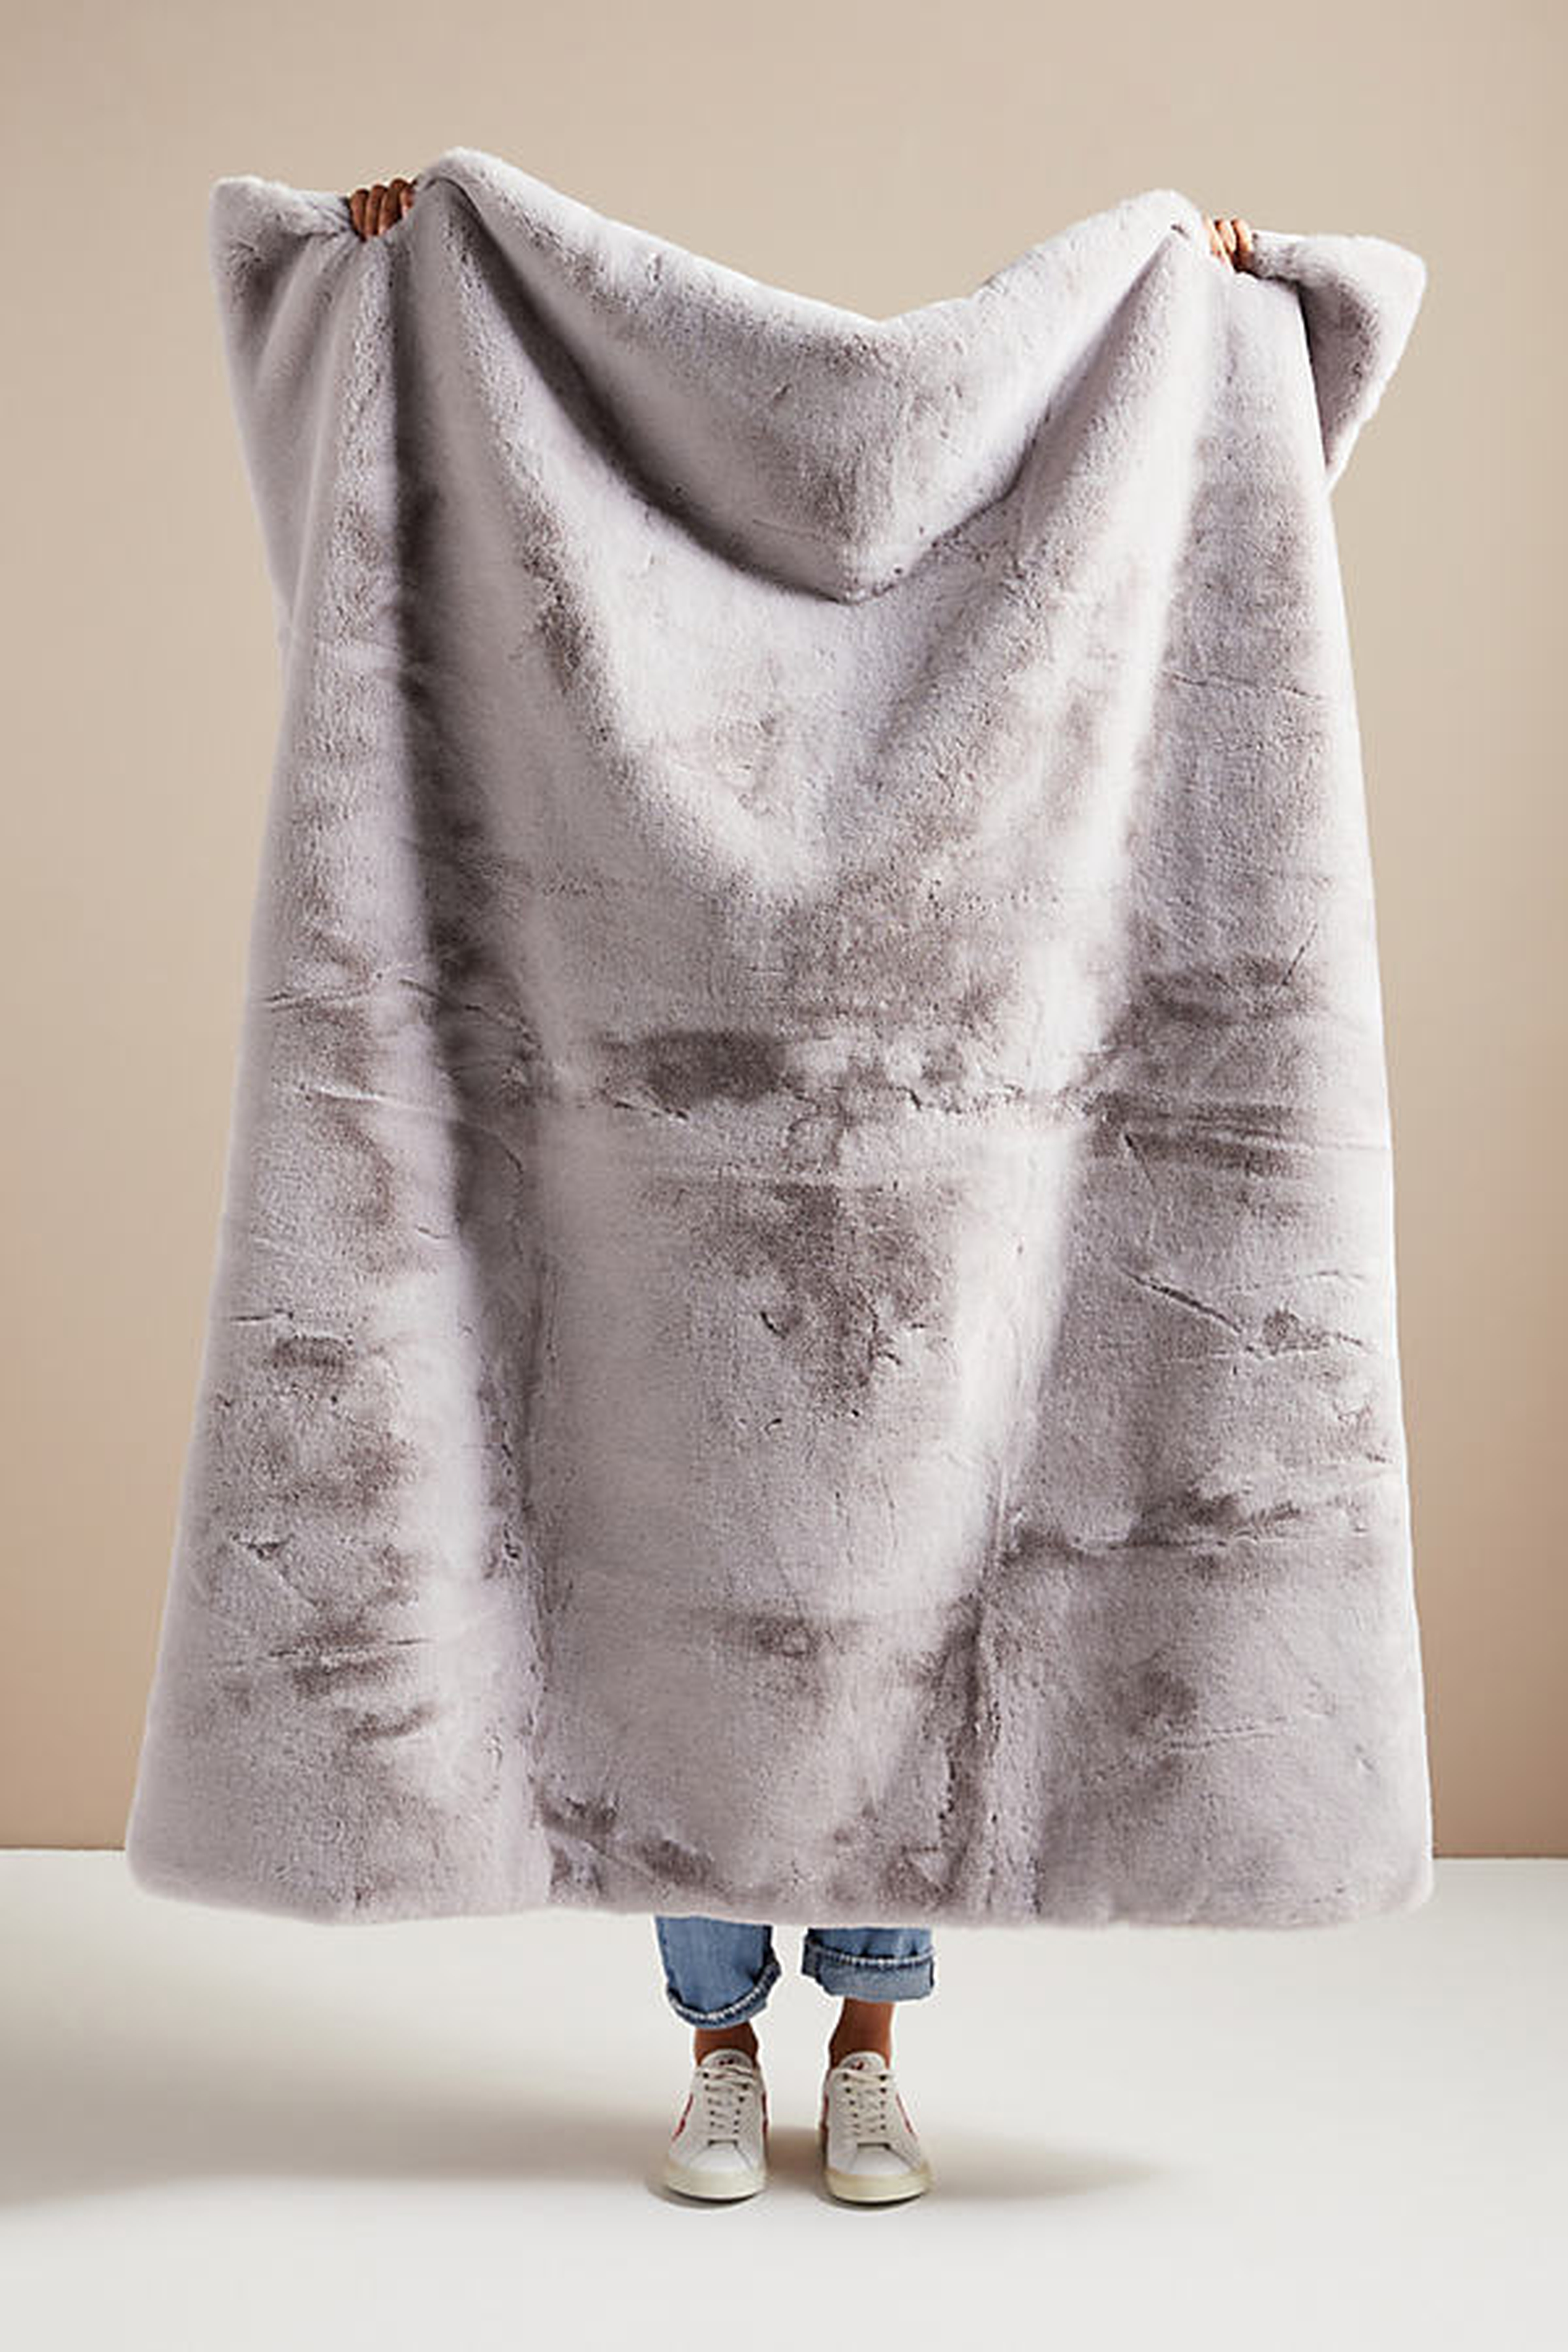 Hibernal Faux Fur Throw Blanket By Anthropologie in Grey - Anthropologie